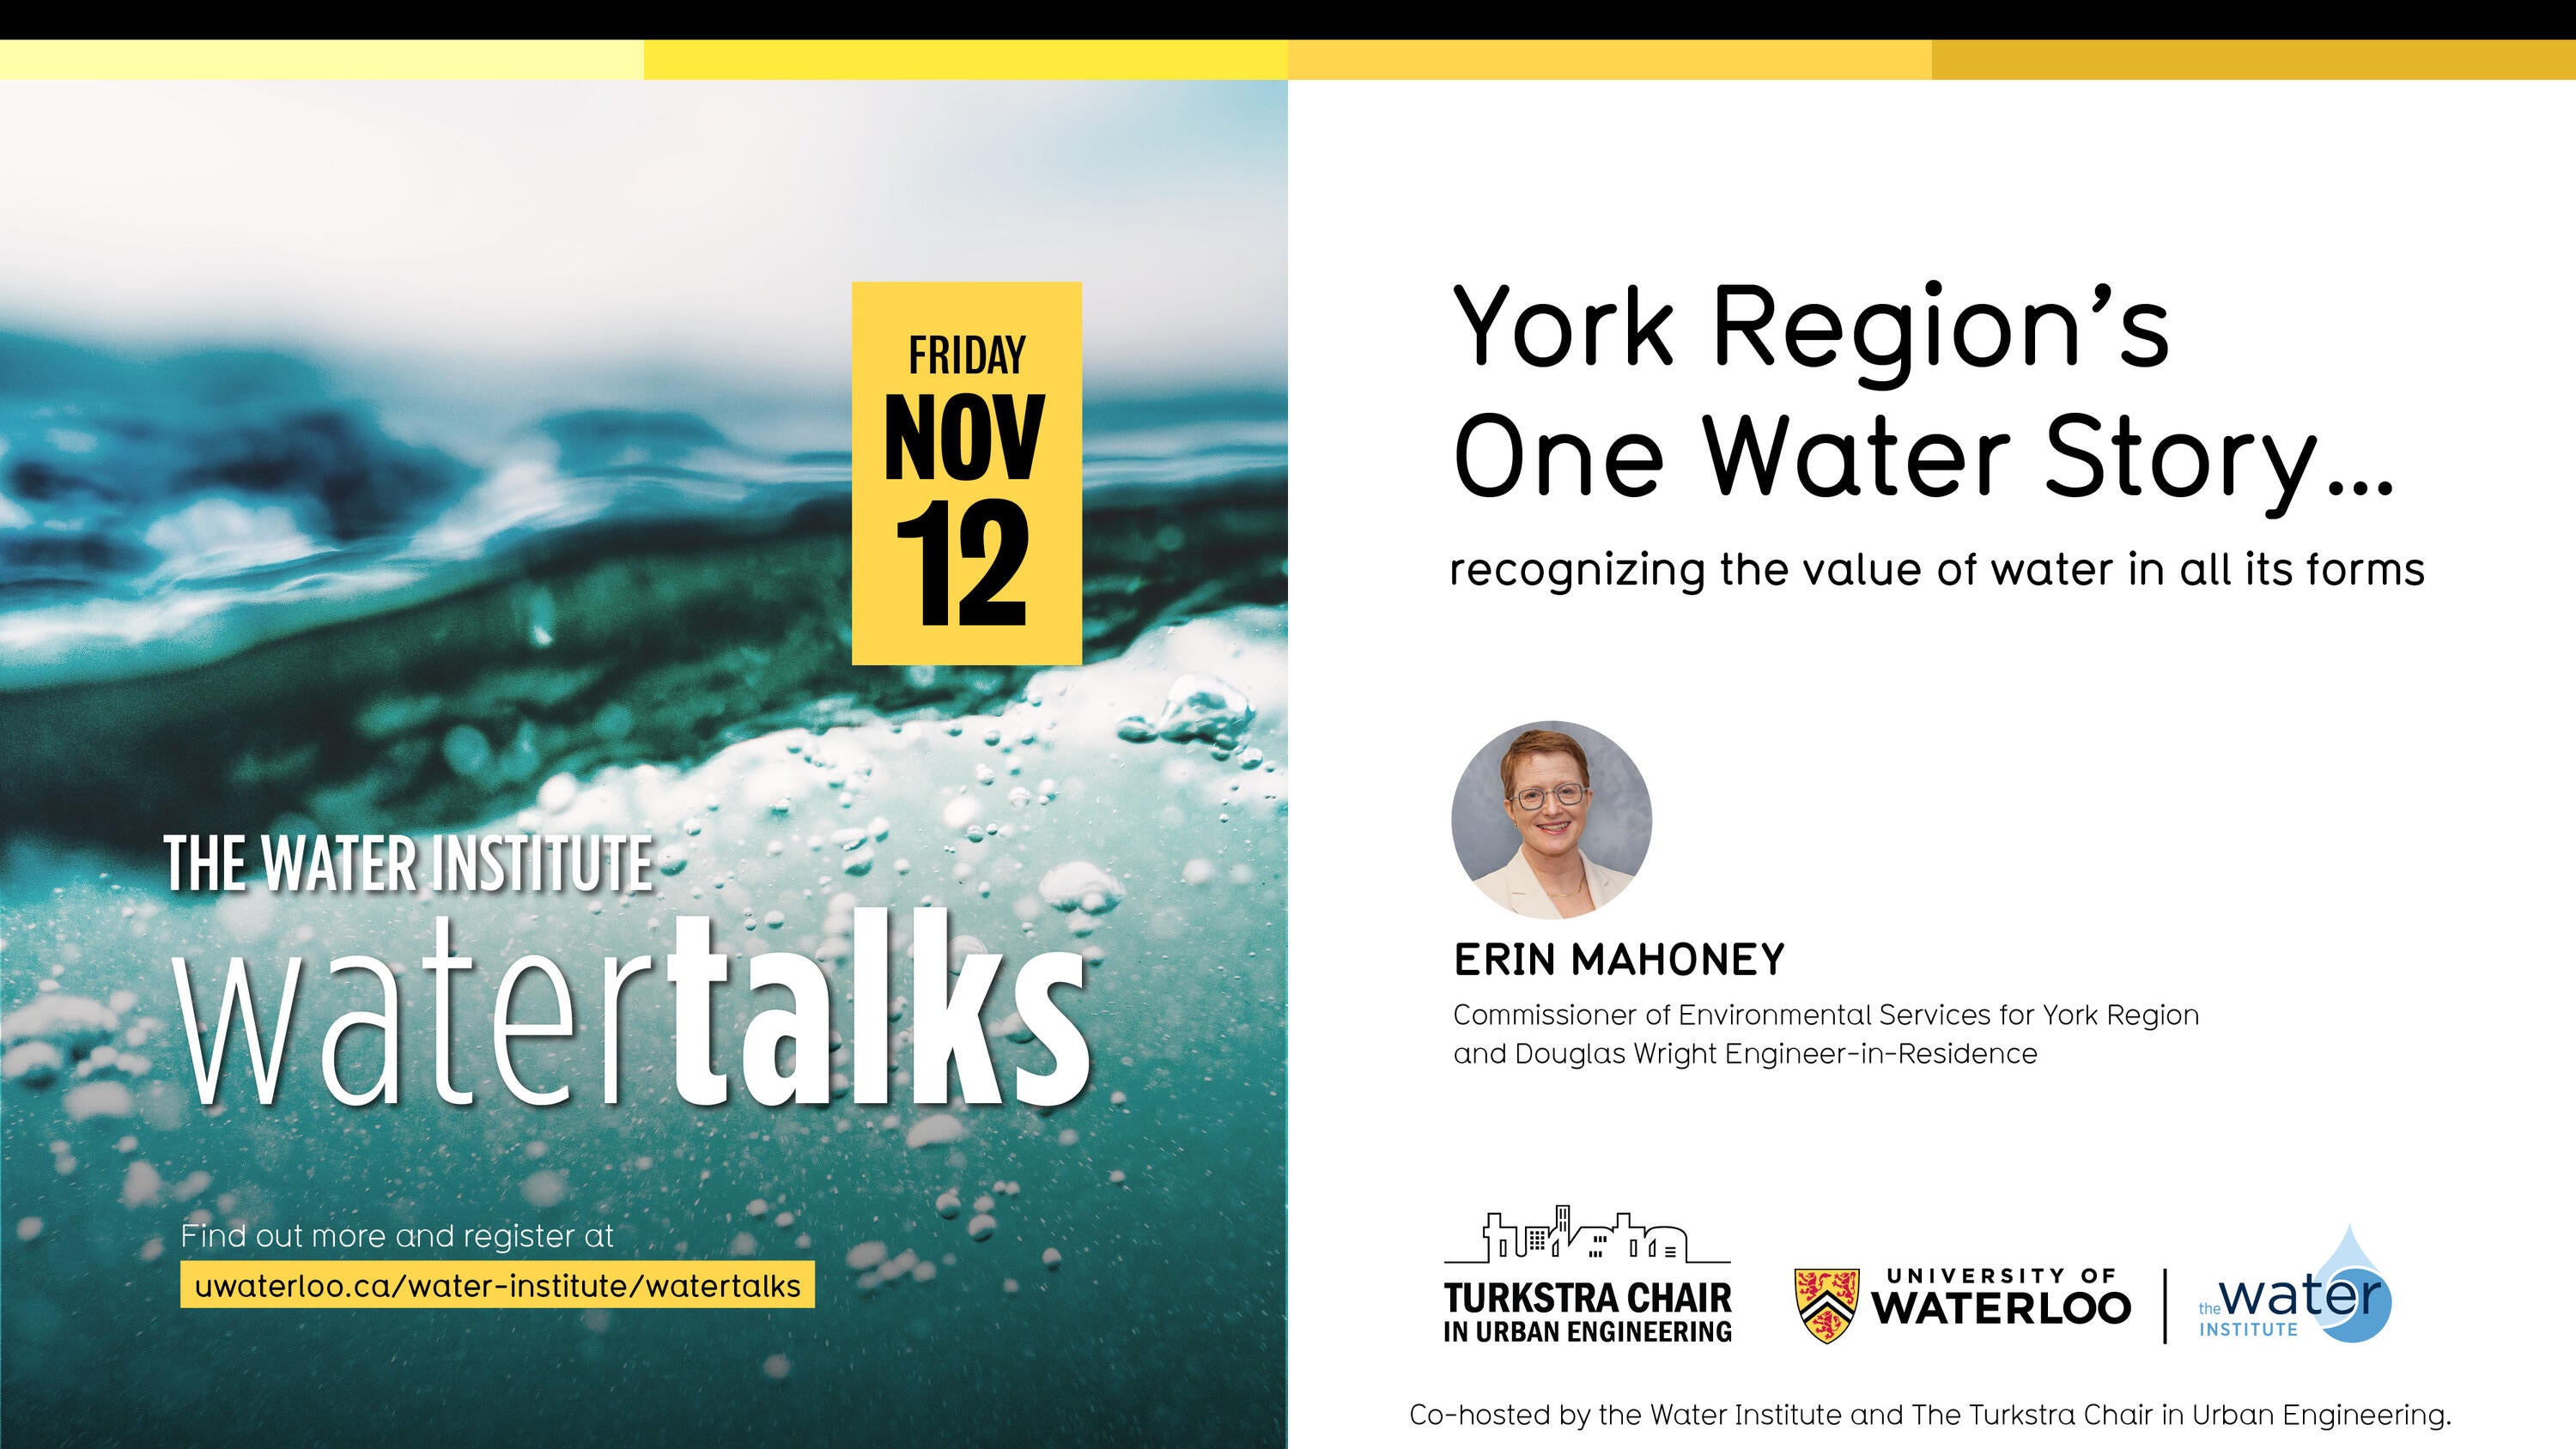 water talks event image with erin mahoney headshot